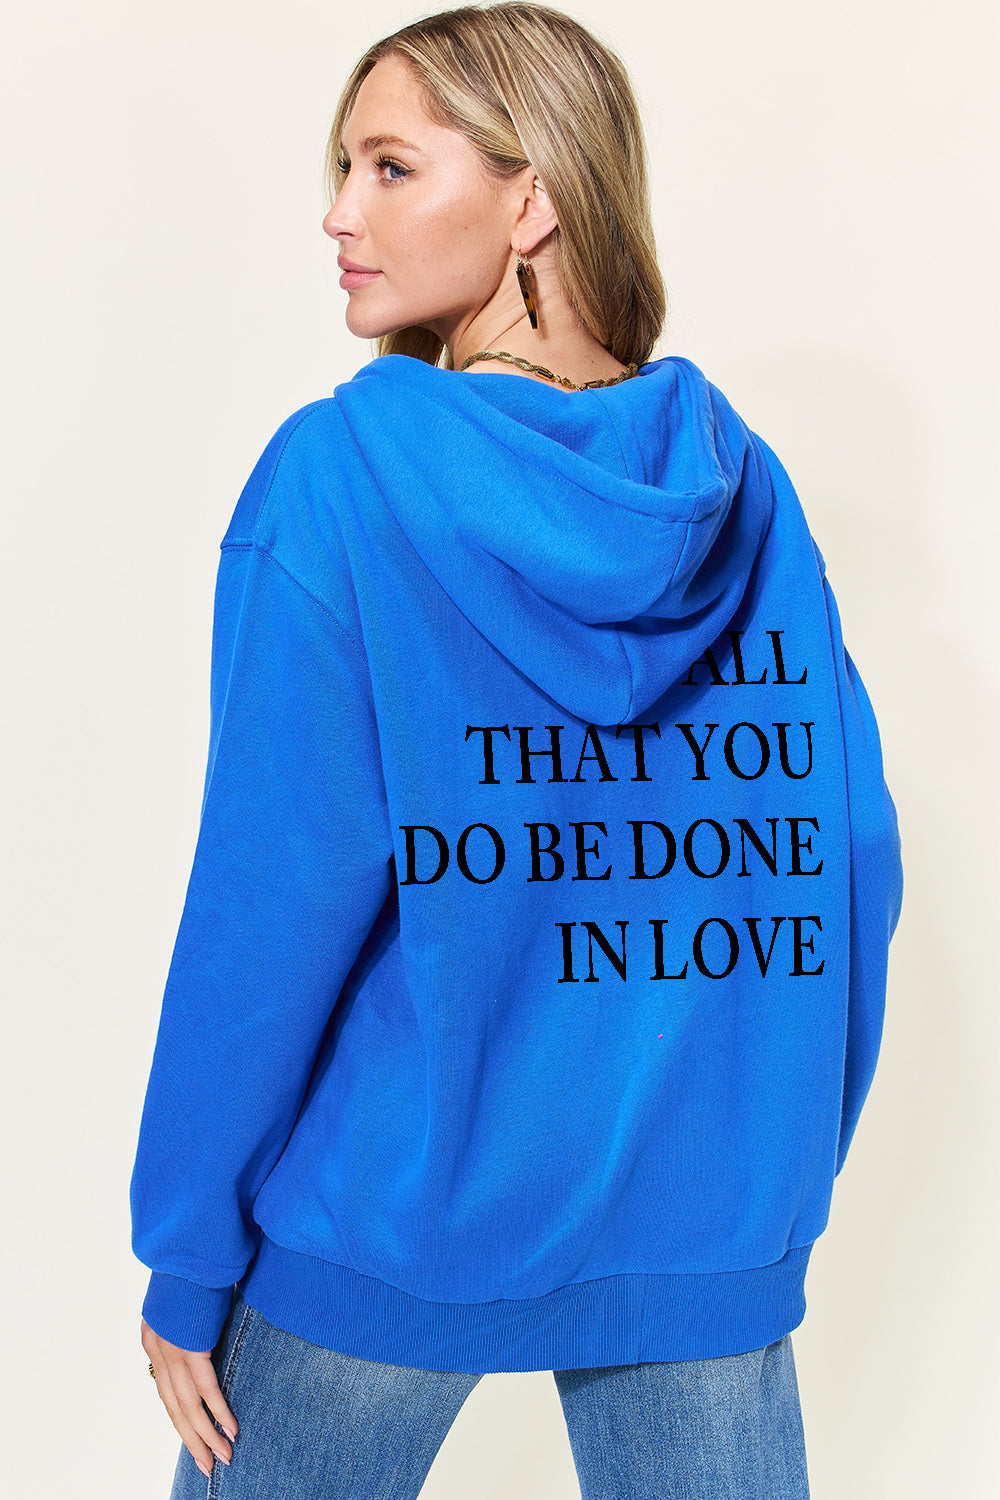 Let All That You Do - Zip-Up Hoodie Sweatshirt.